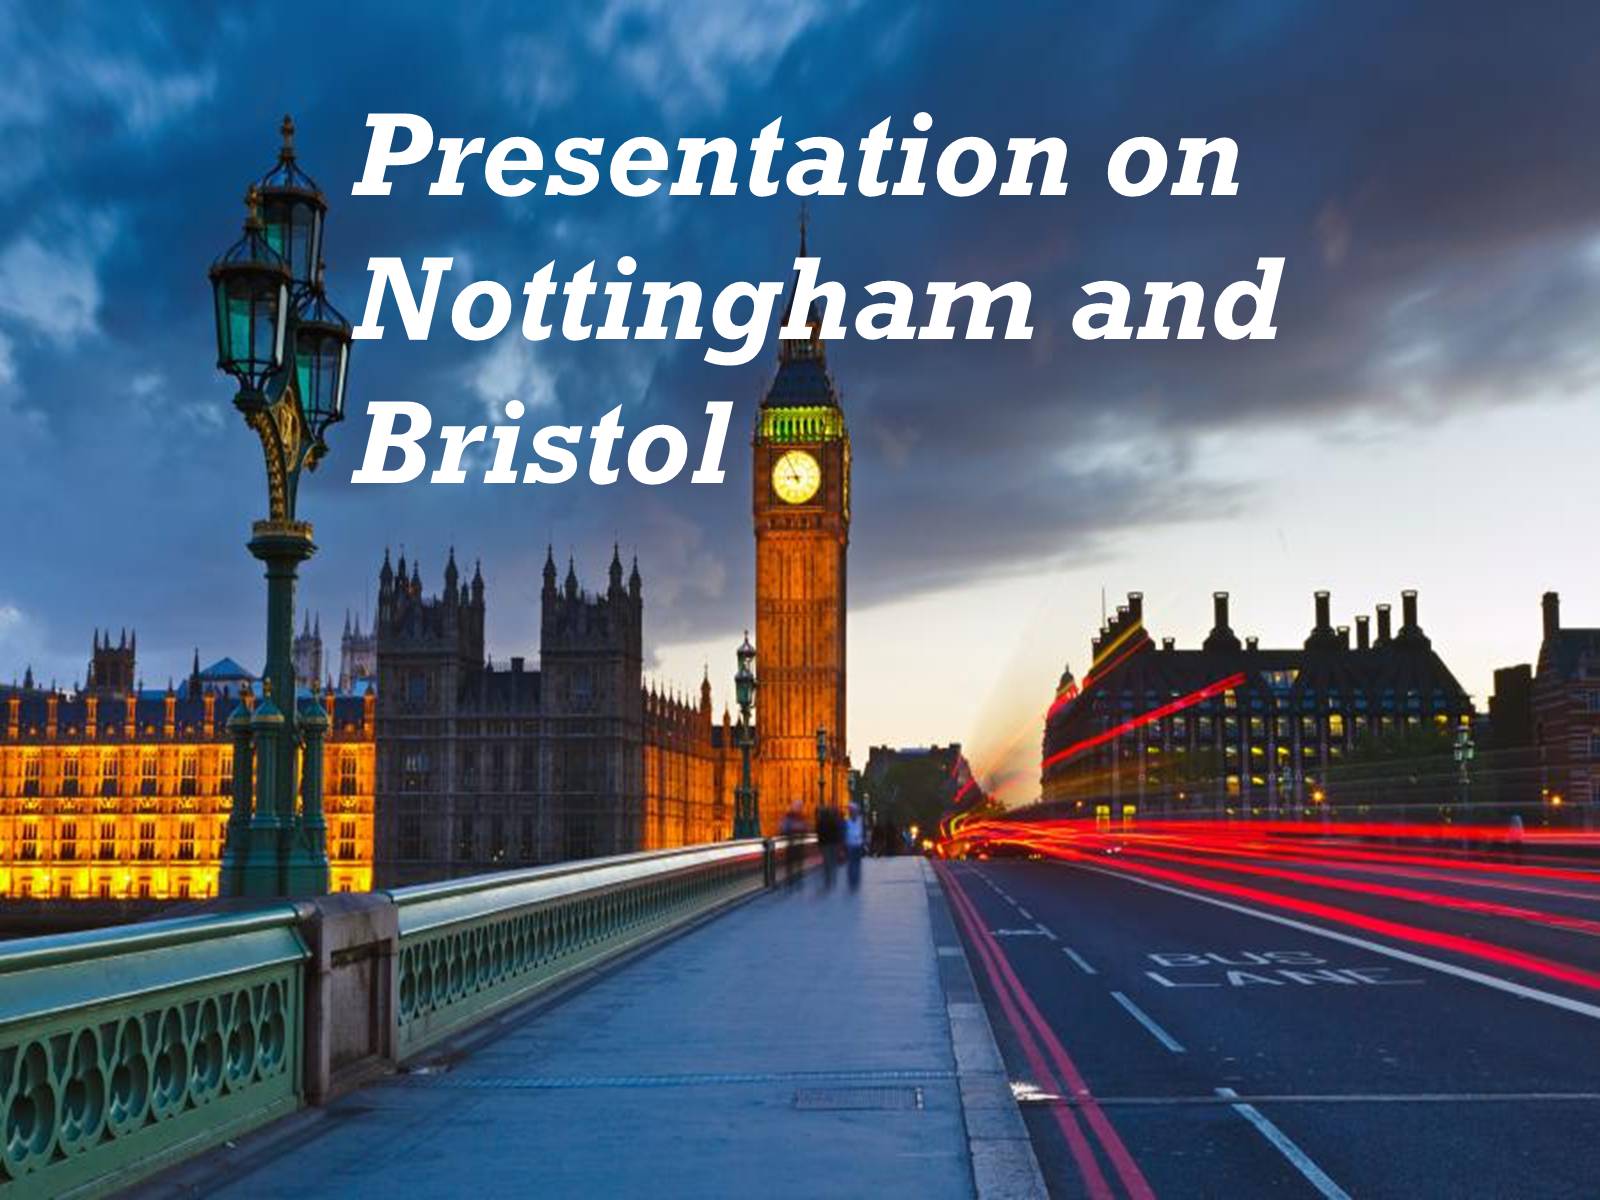 Презентація на тему «Presentation on Nottingham and Bristol» - Слайд #1